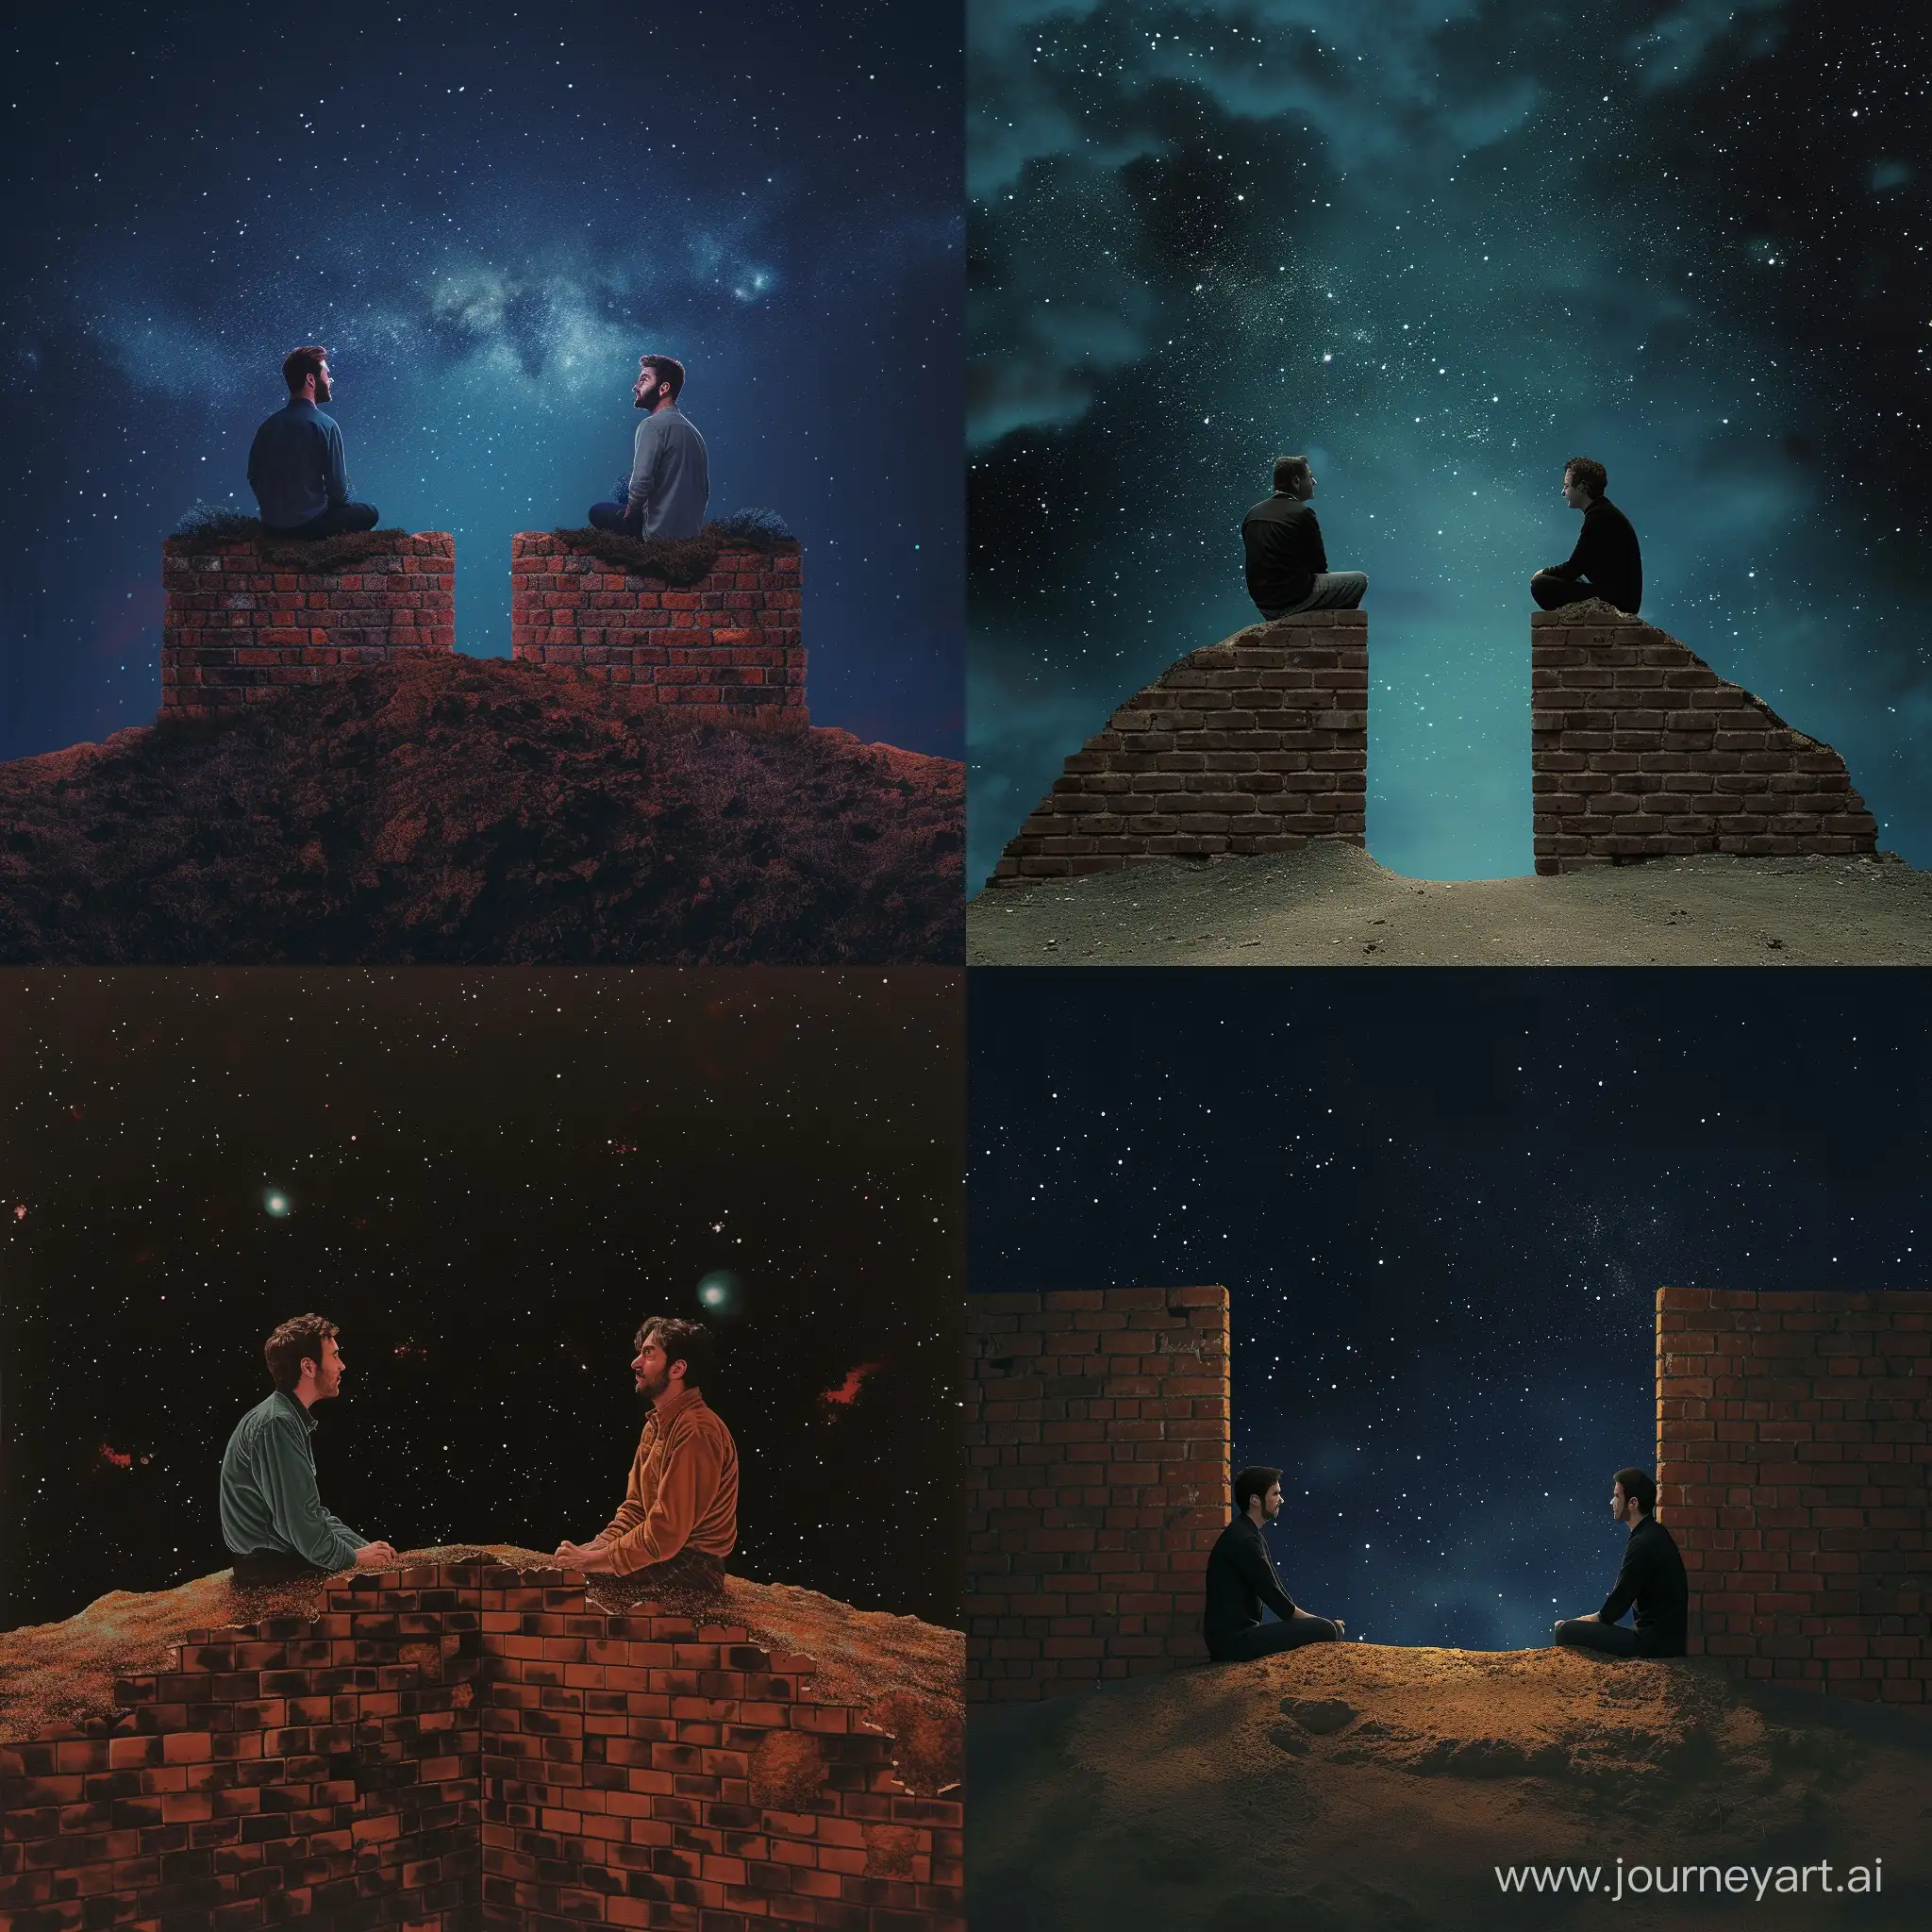 двое геев сидят на холме среди ночного неба, их разделяет кирпичная стена